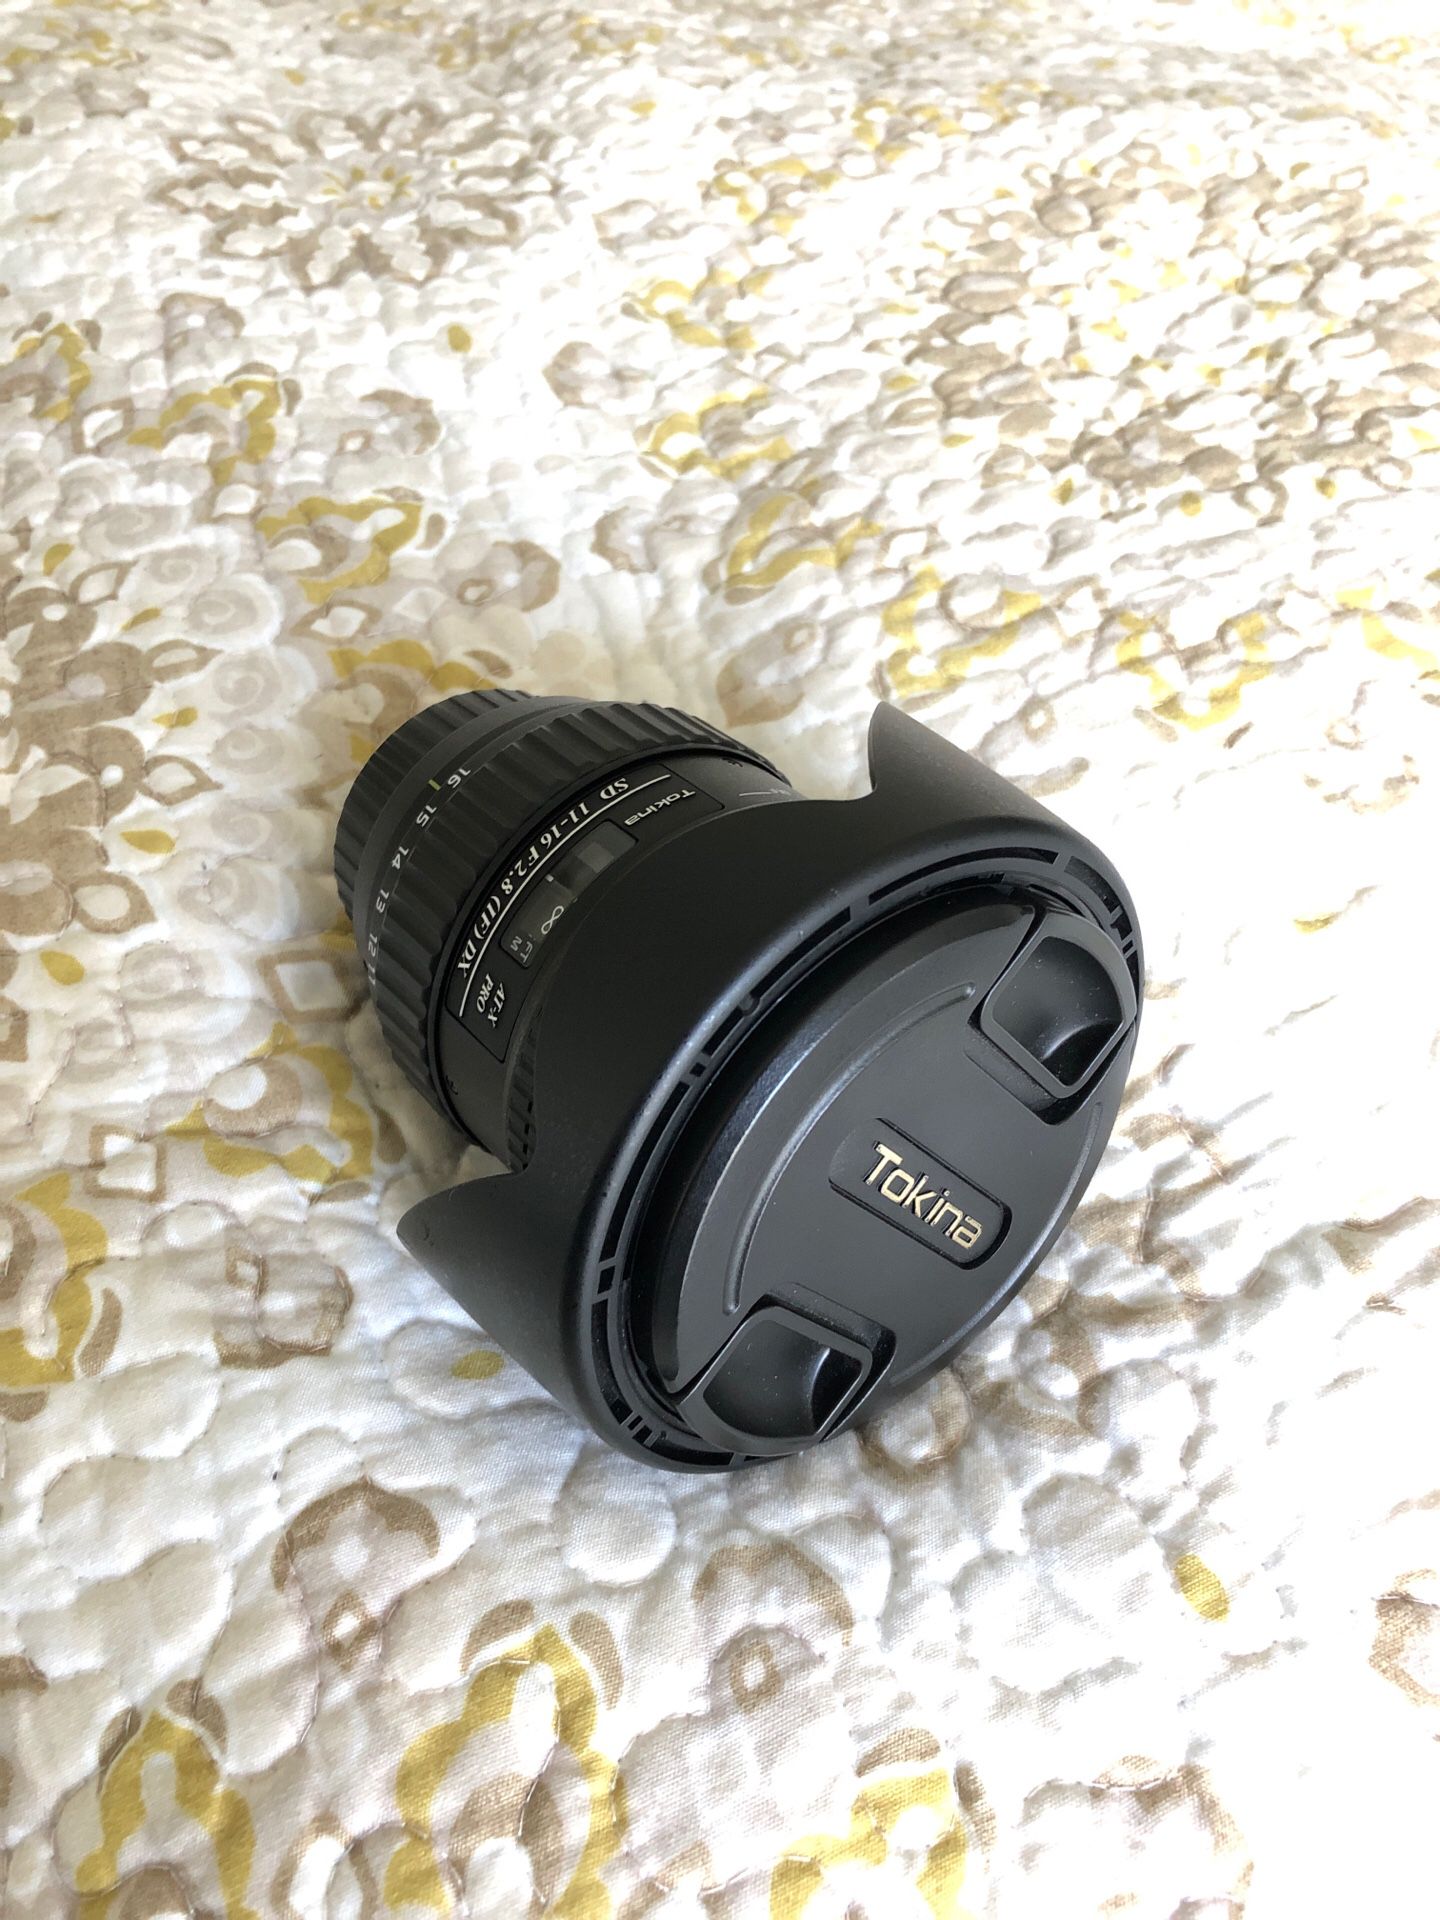 Tokina 11-16mm F/2.8 ATX Pro DX Autofocus Zoom Lens for Nikon Digital SLR Cameras